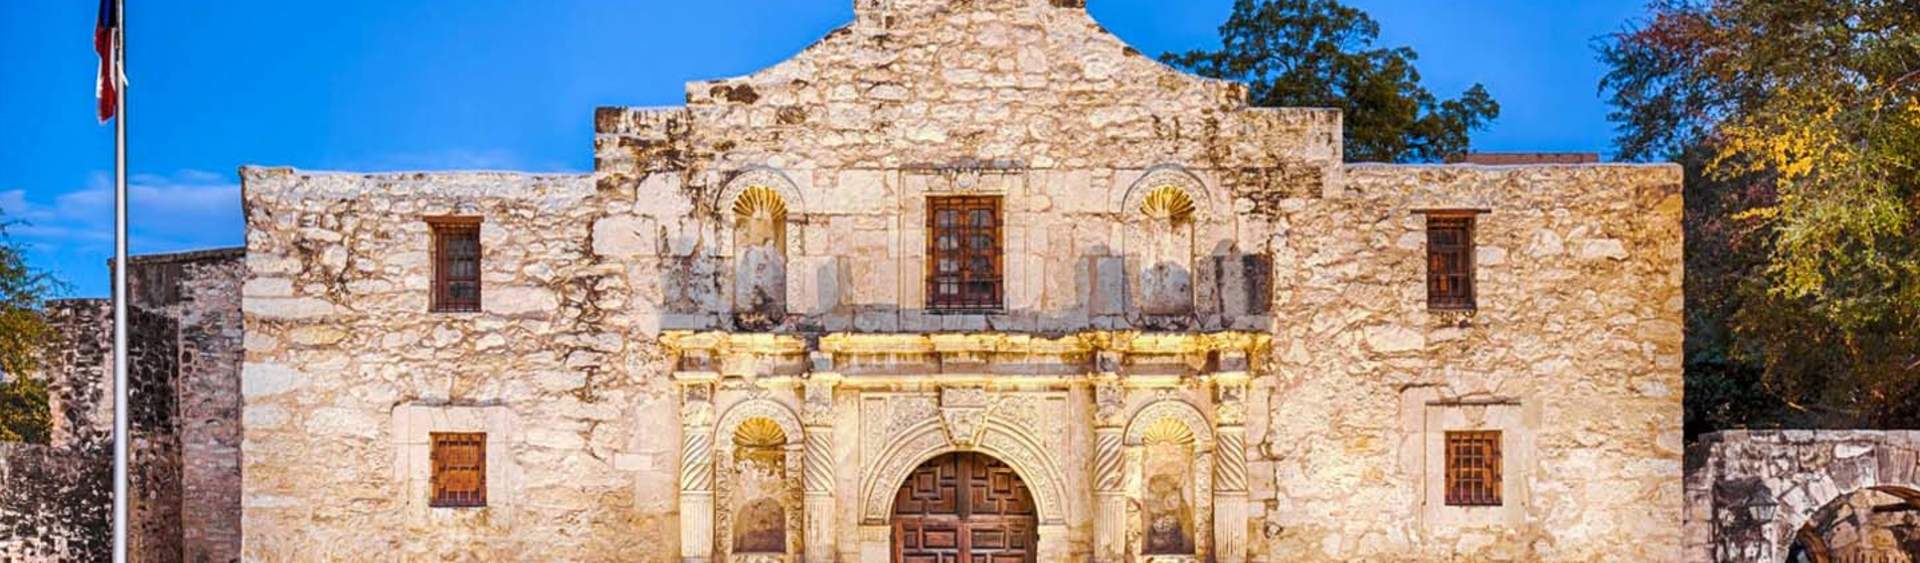 The Alamo Texas